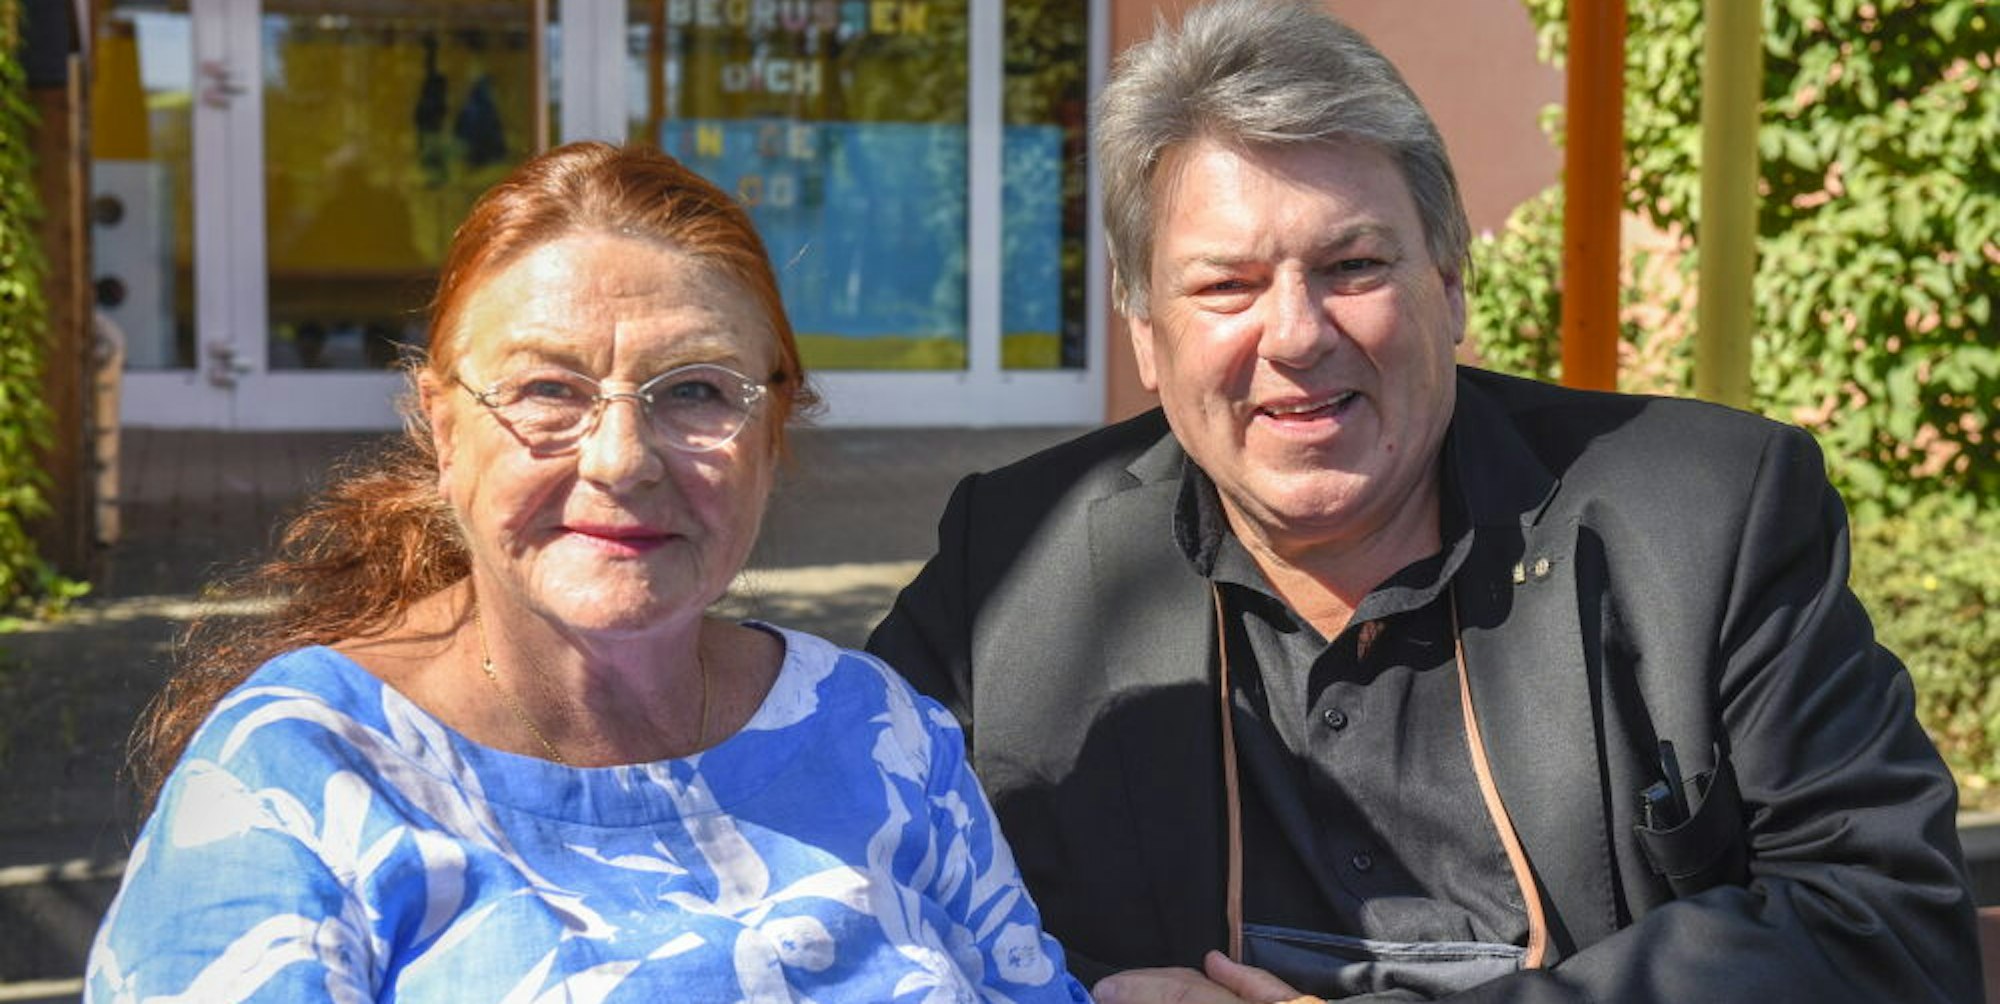 Landrat Michael Kreuzberg (CDU) und seine Ehefrau Ellen Thoben-Kreuzberg am Tag der Kommunalwahl im September.